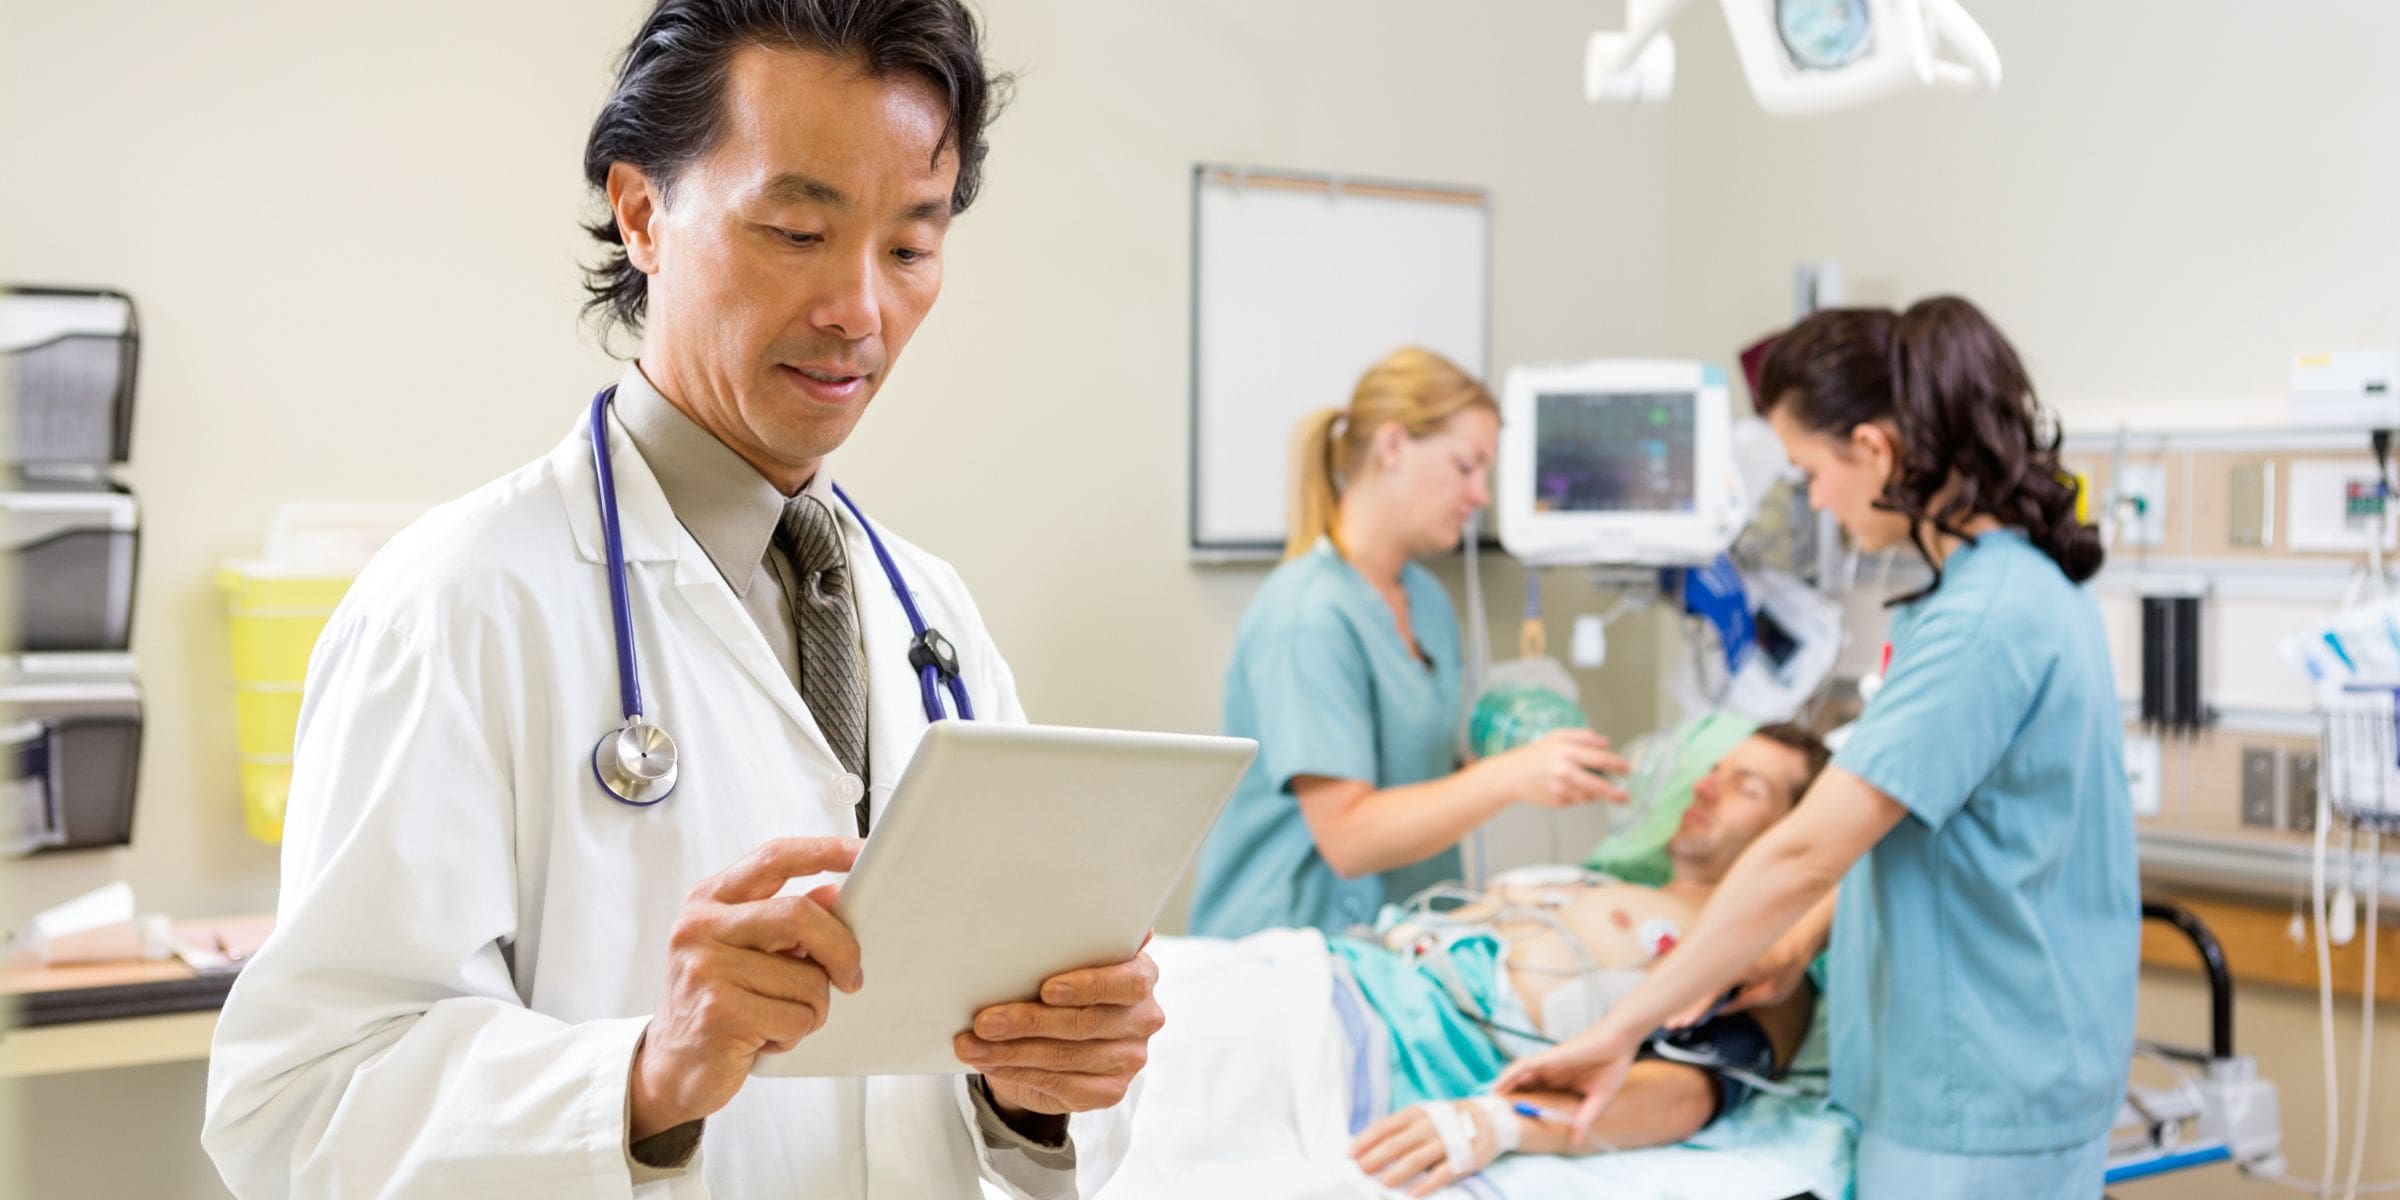 Male doctor on tablet in emergency room